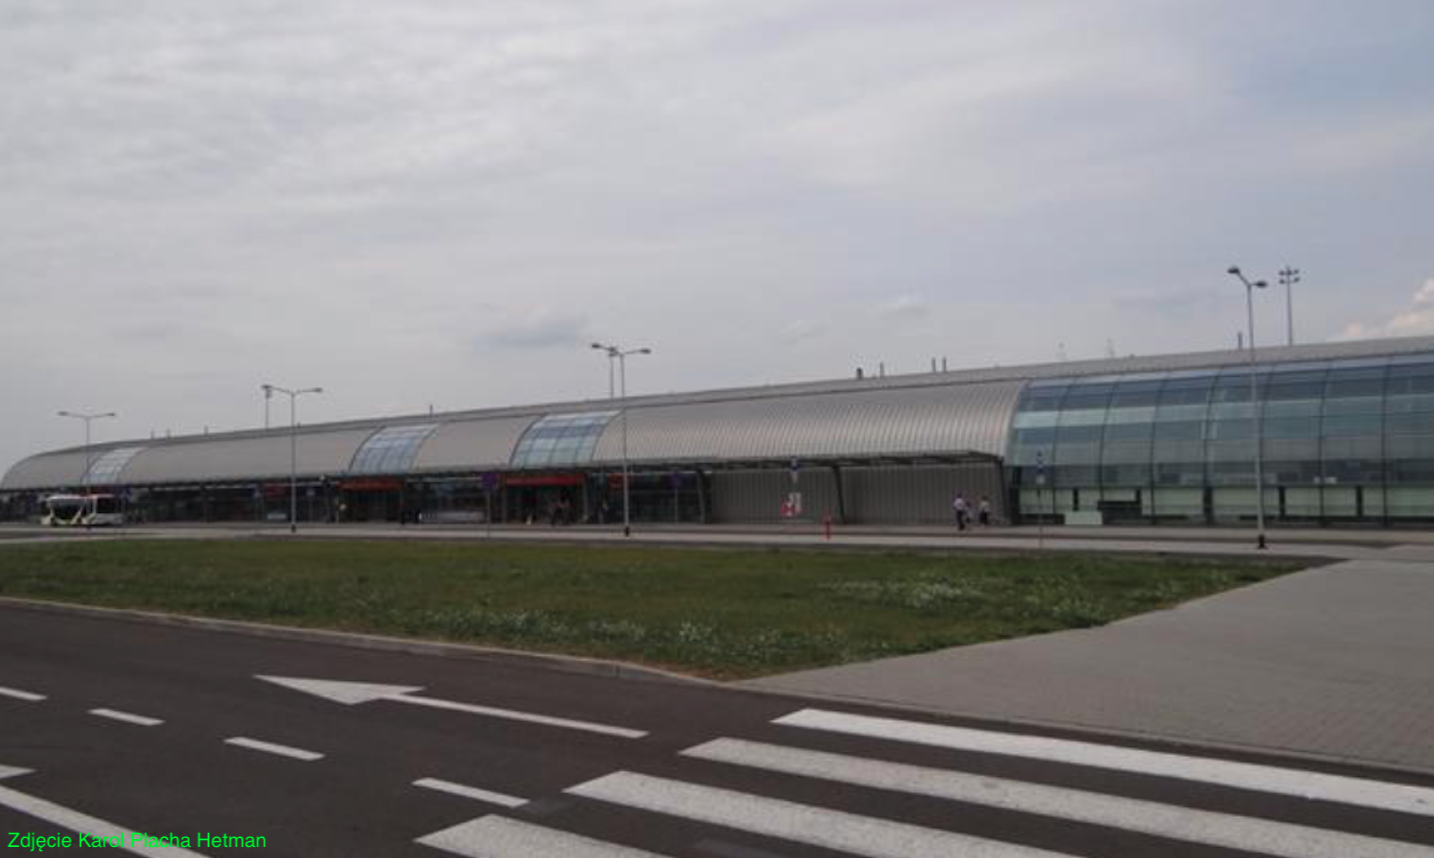 Modlin airport. 2012. Photo by Karol Placha Hetman